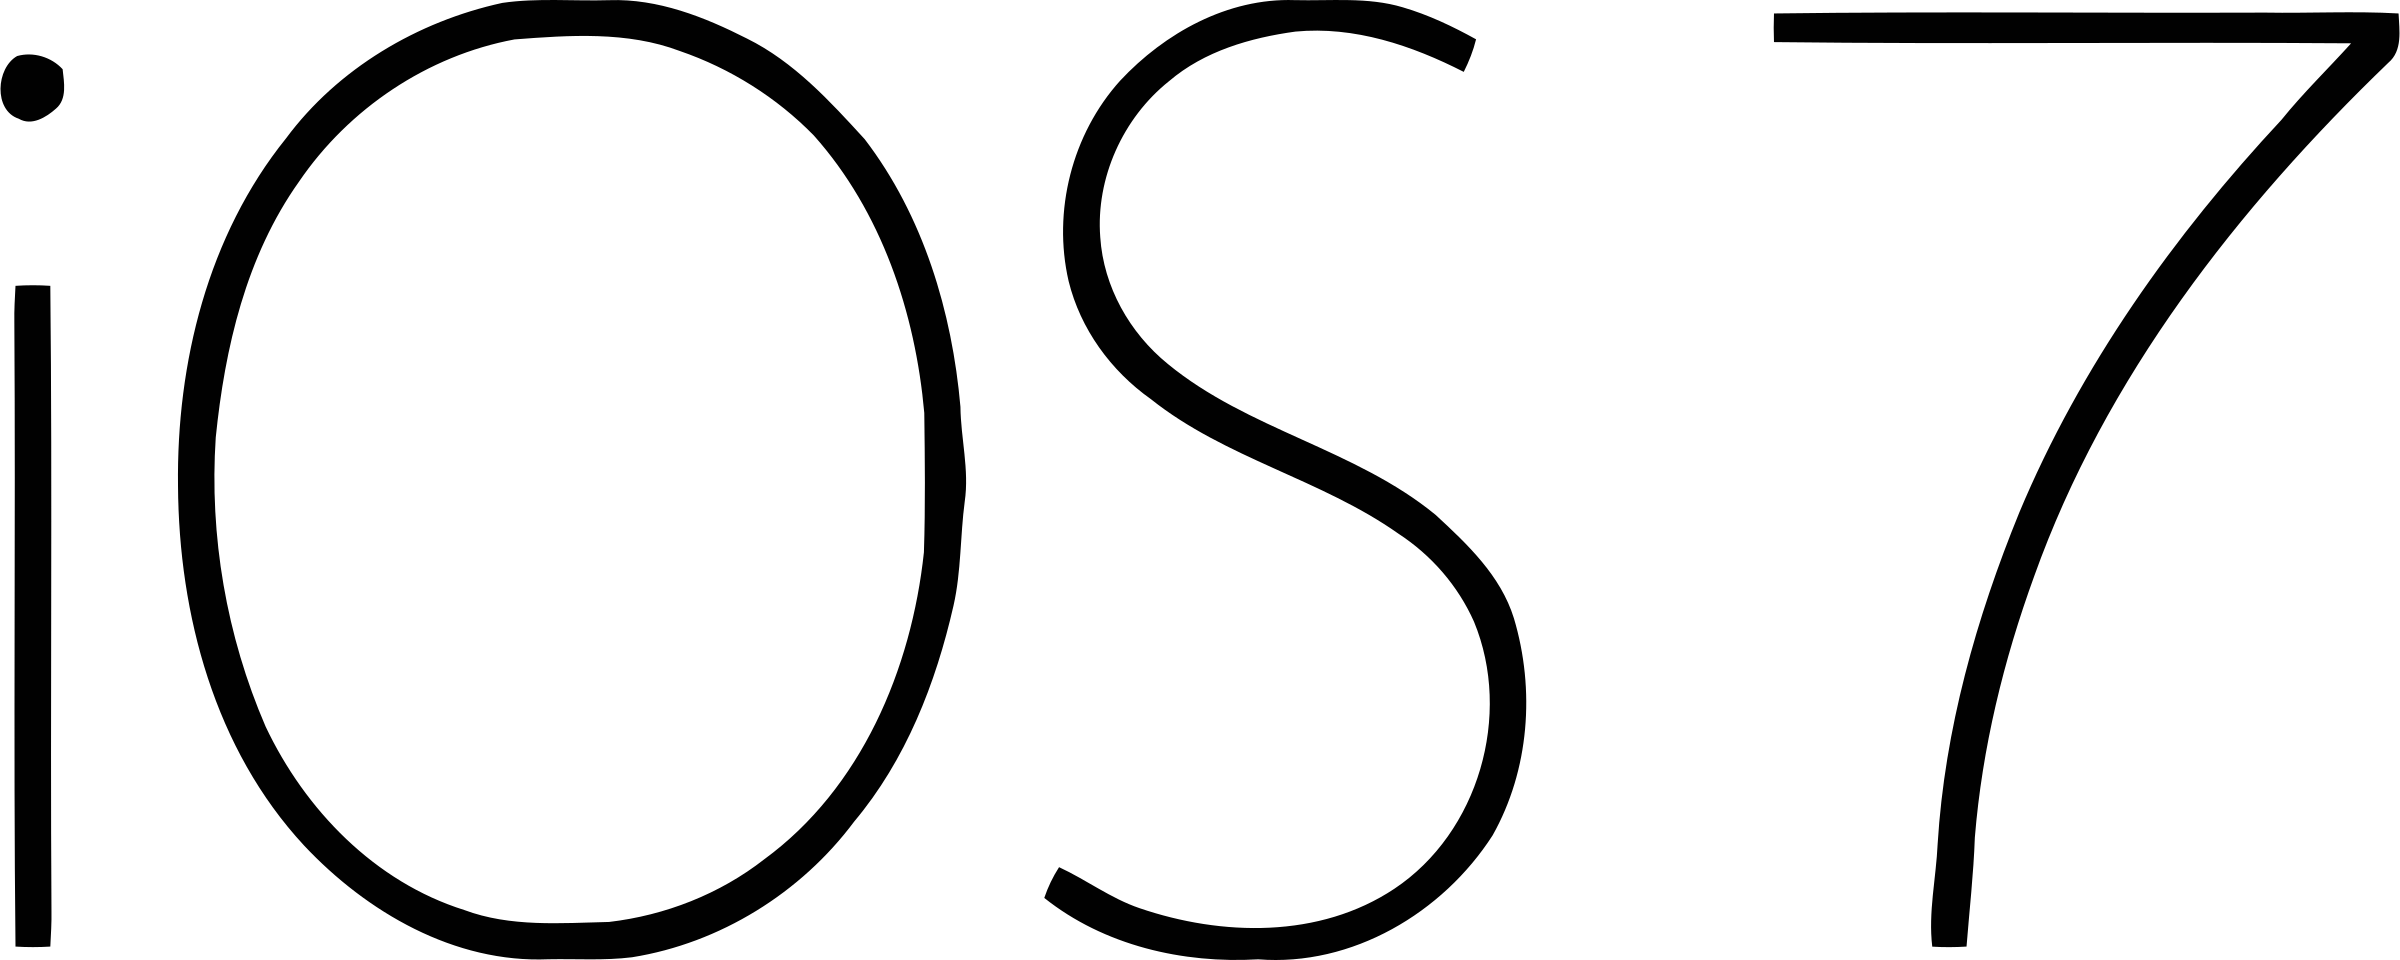 Apple Ios 7 Logo Black And White - Iphone 7 Logo Vector (2400x960)